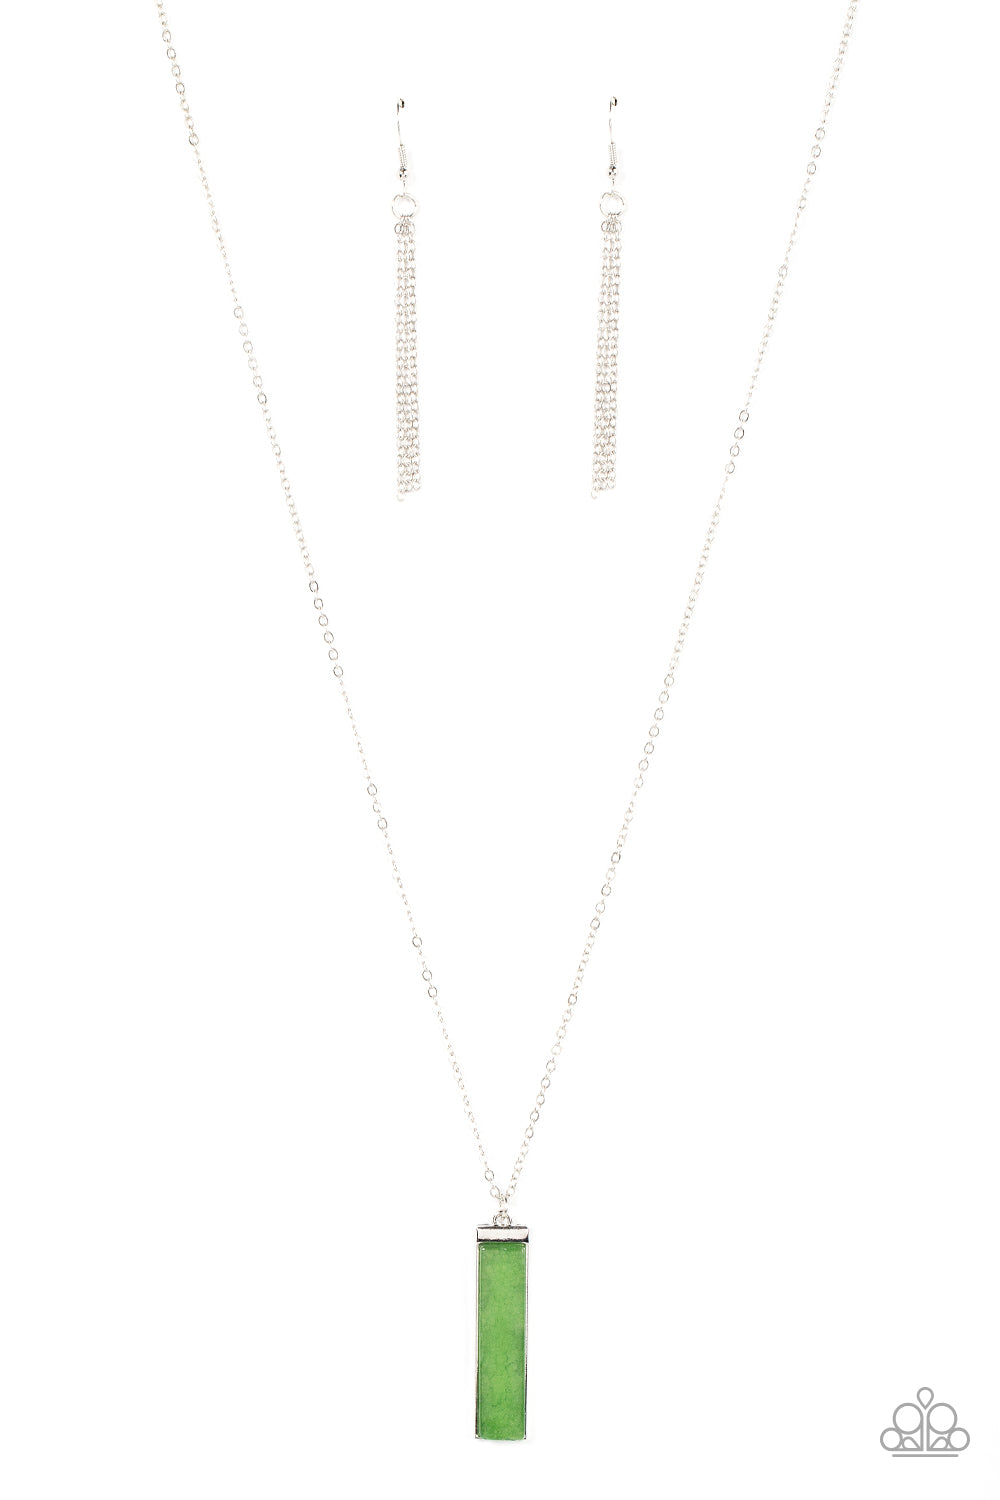 Set in GEMSTONE - green - Paparazzi necklace